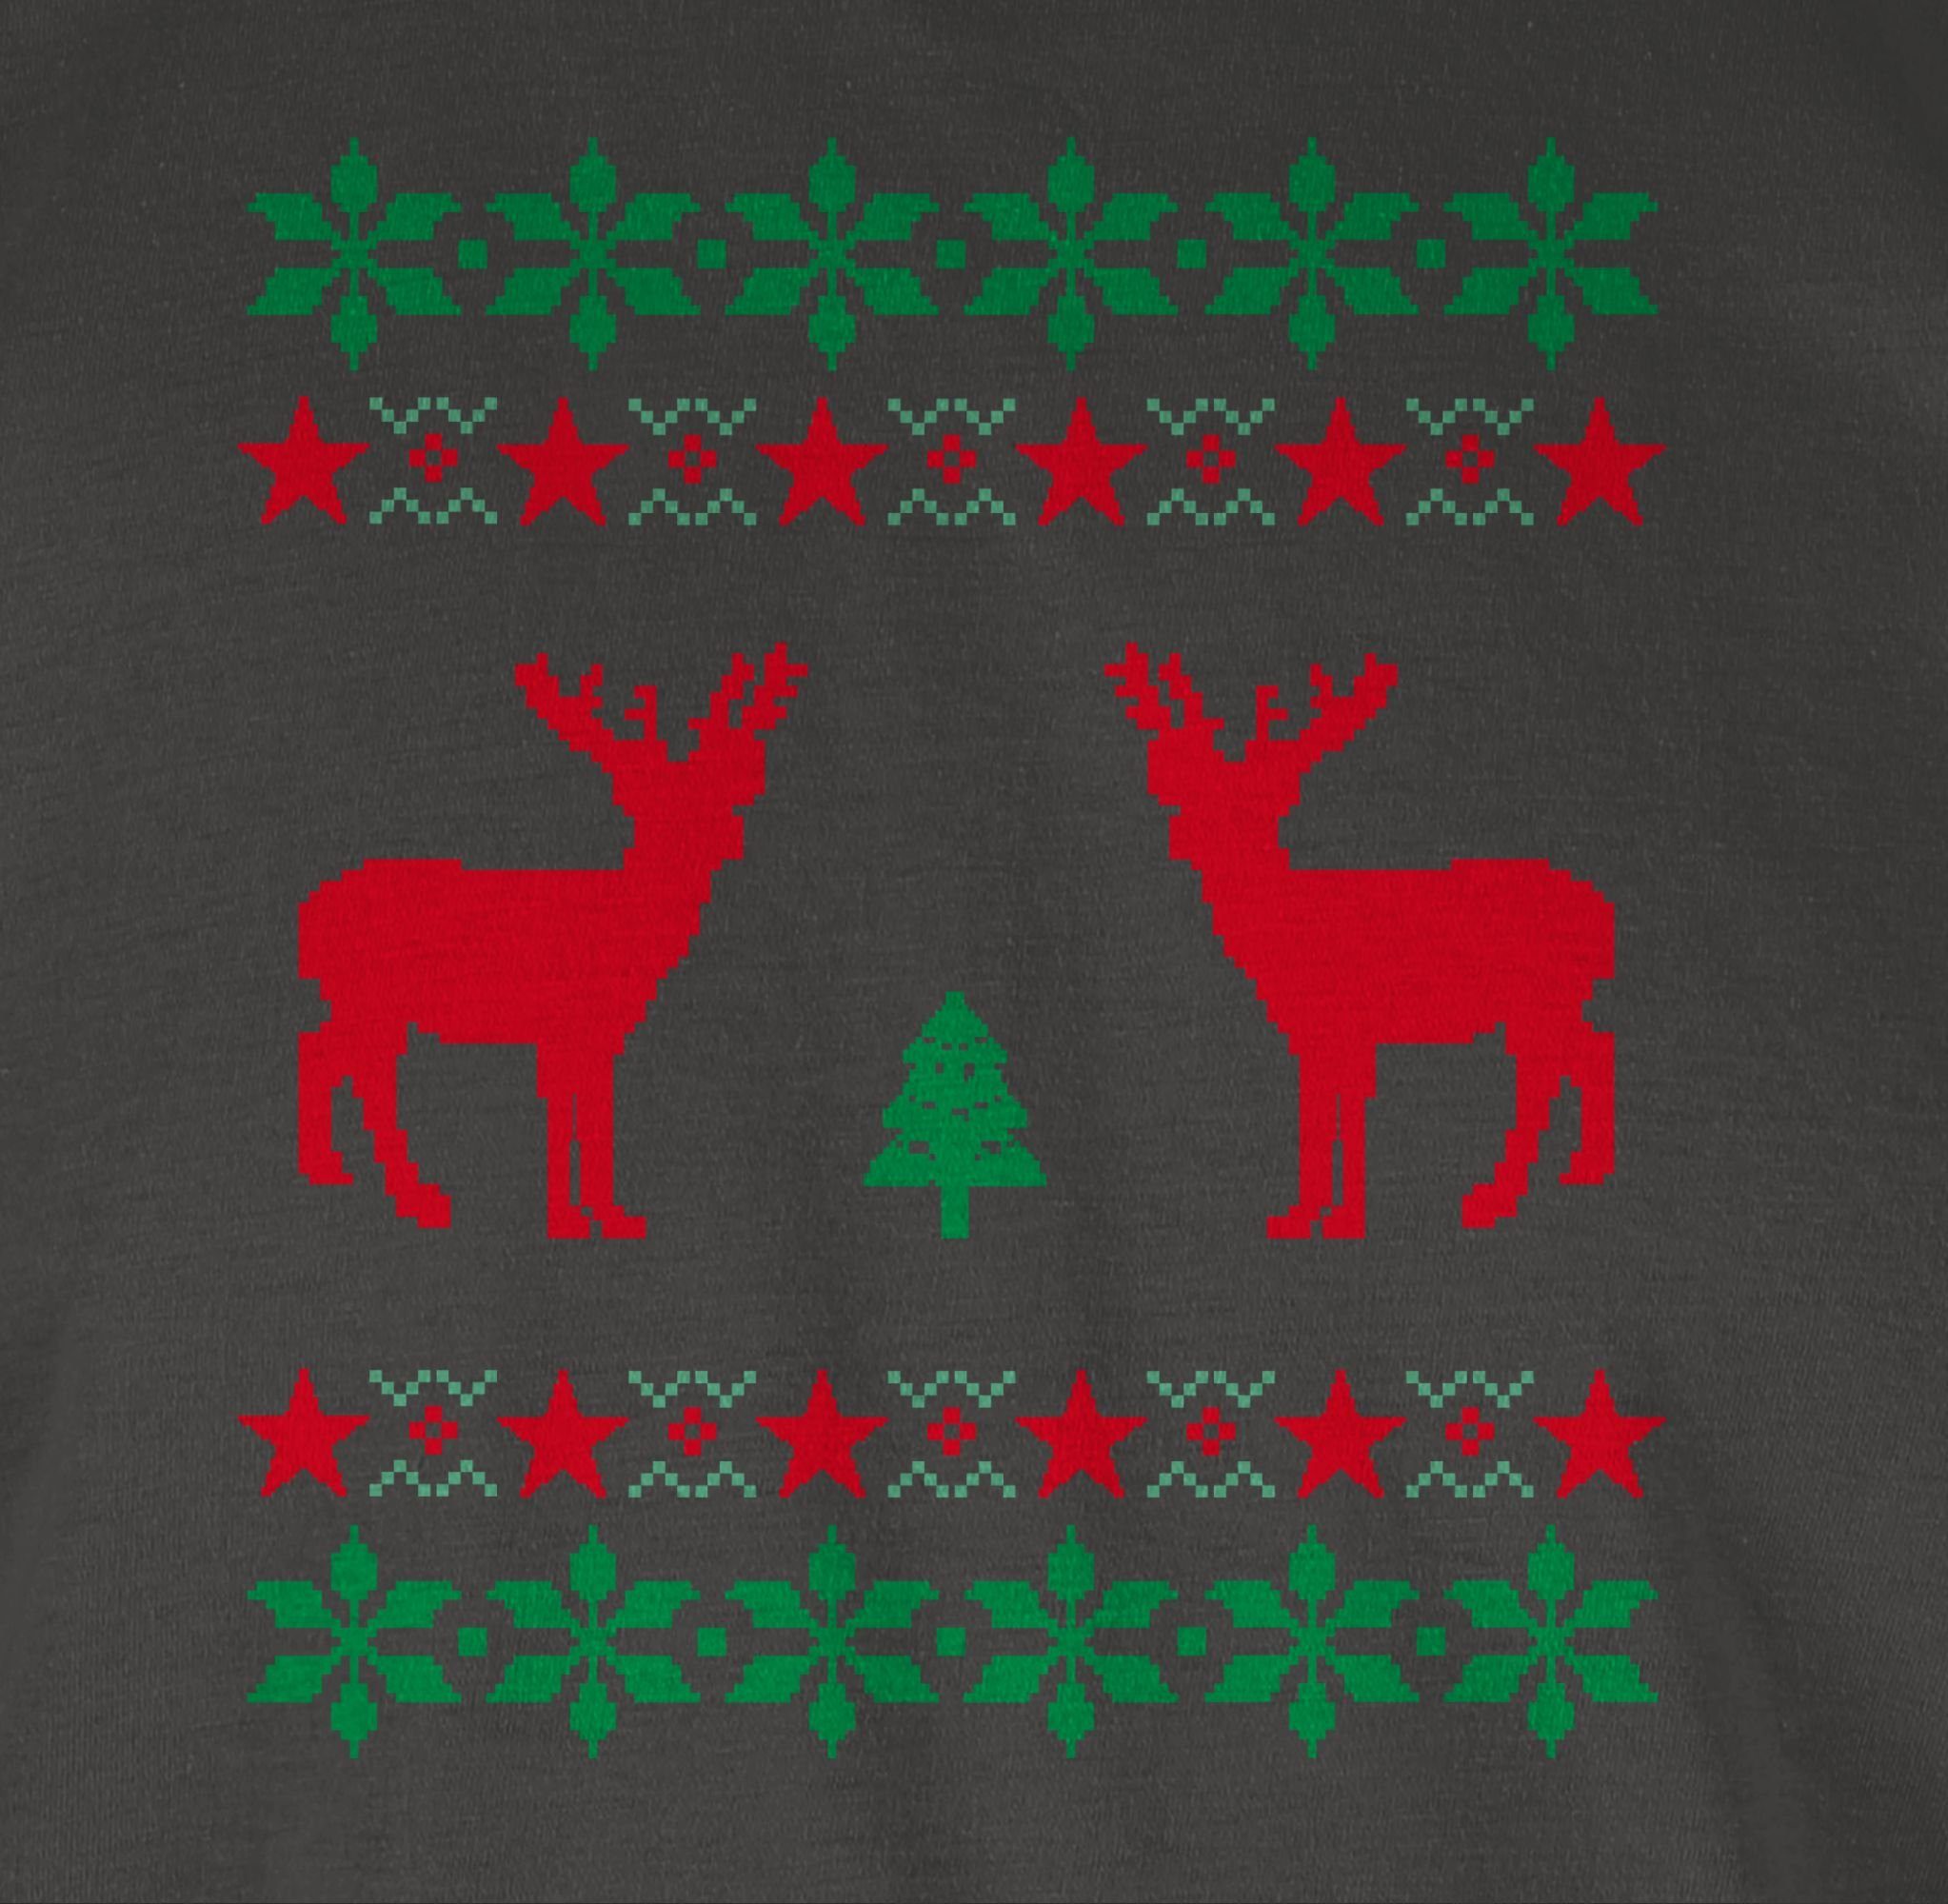 Shirtracer T-Shirt Norweger Pixel Kleidung Rentier Weihachten Weihnachten 3 Dunkelgrau